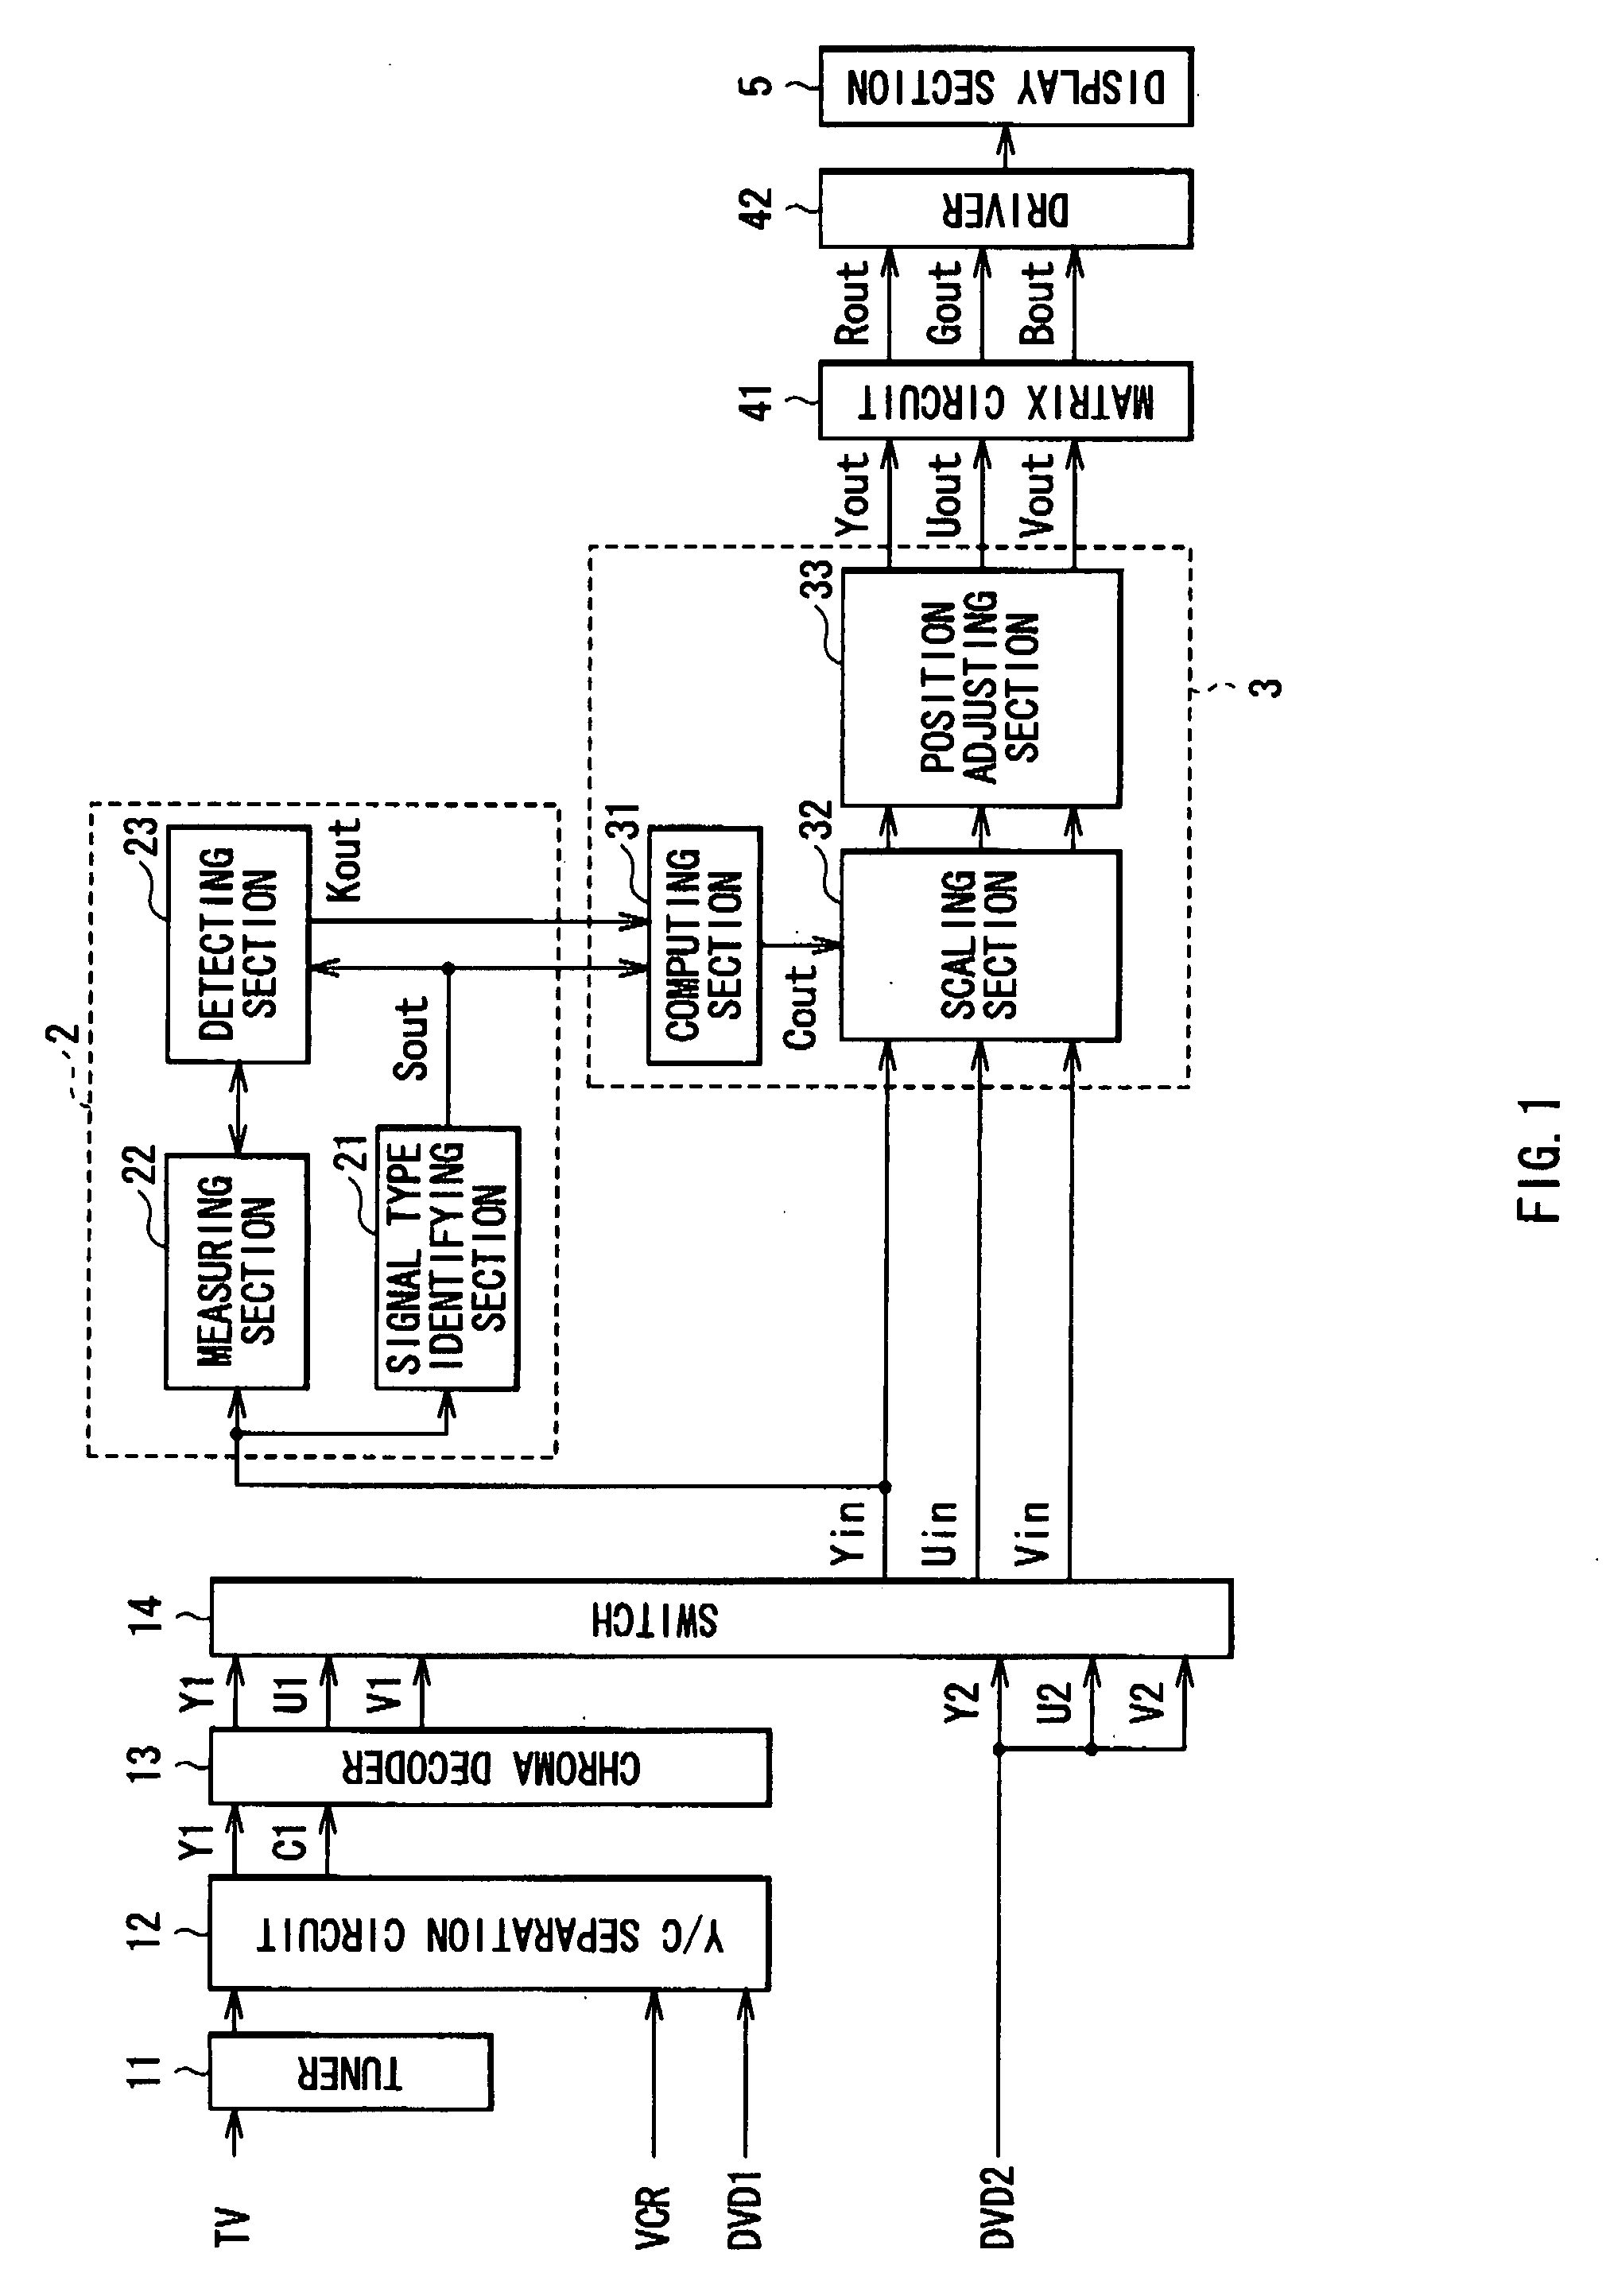 Image signal processing apparatus, image display, and image display method